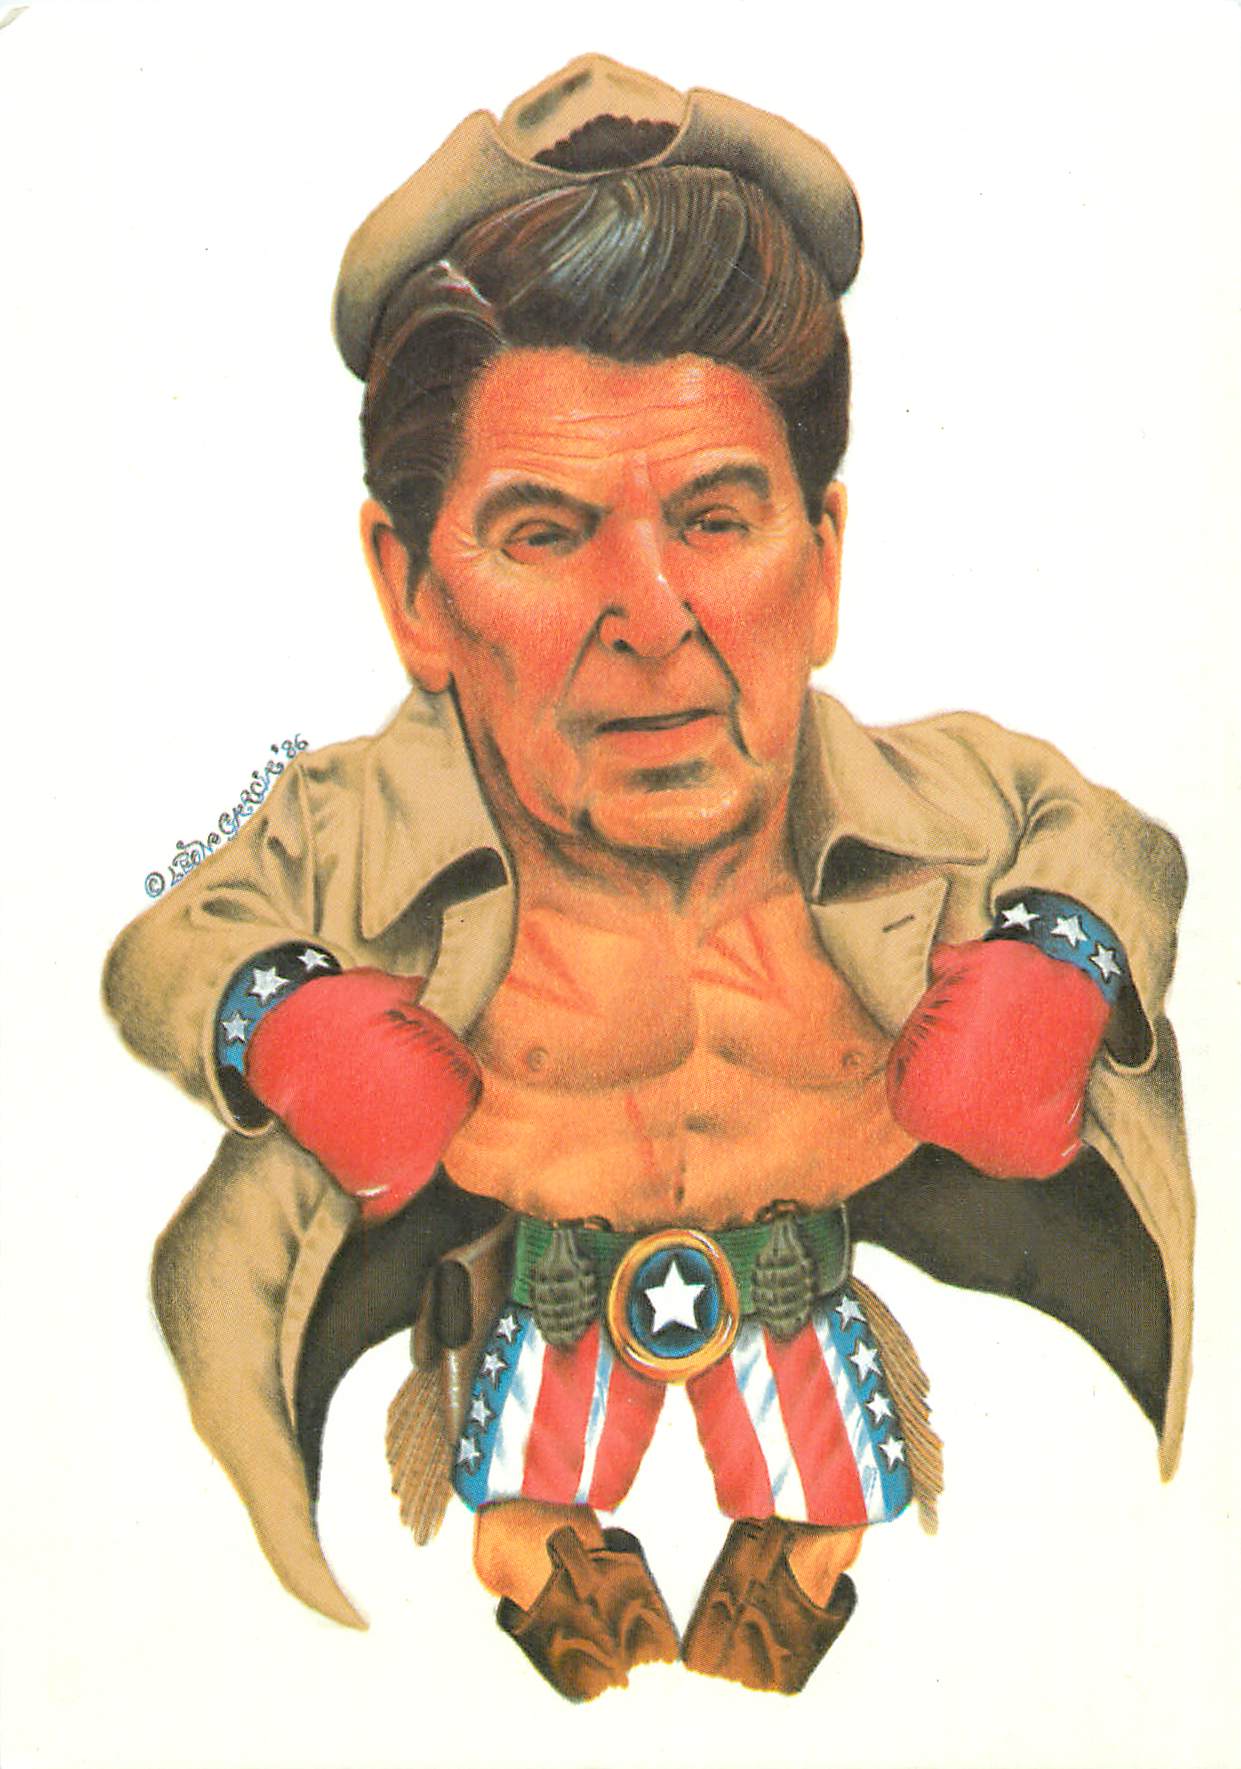 "Reagan Balboa"